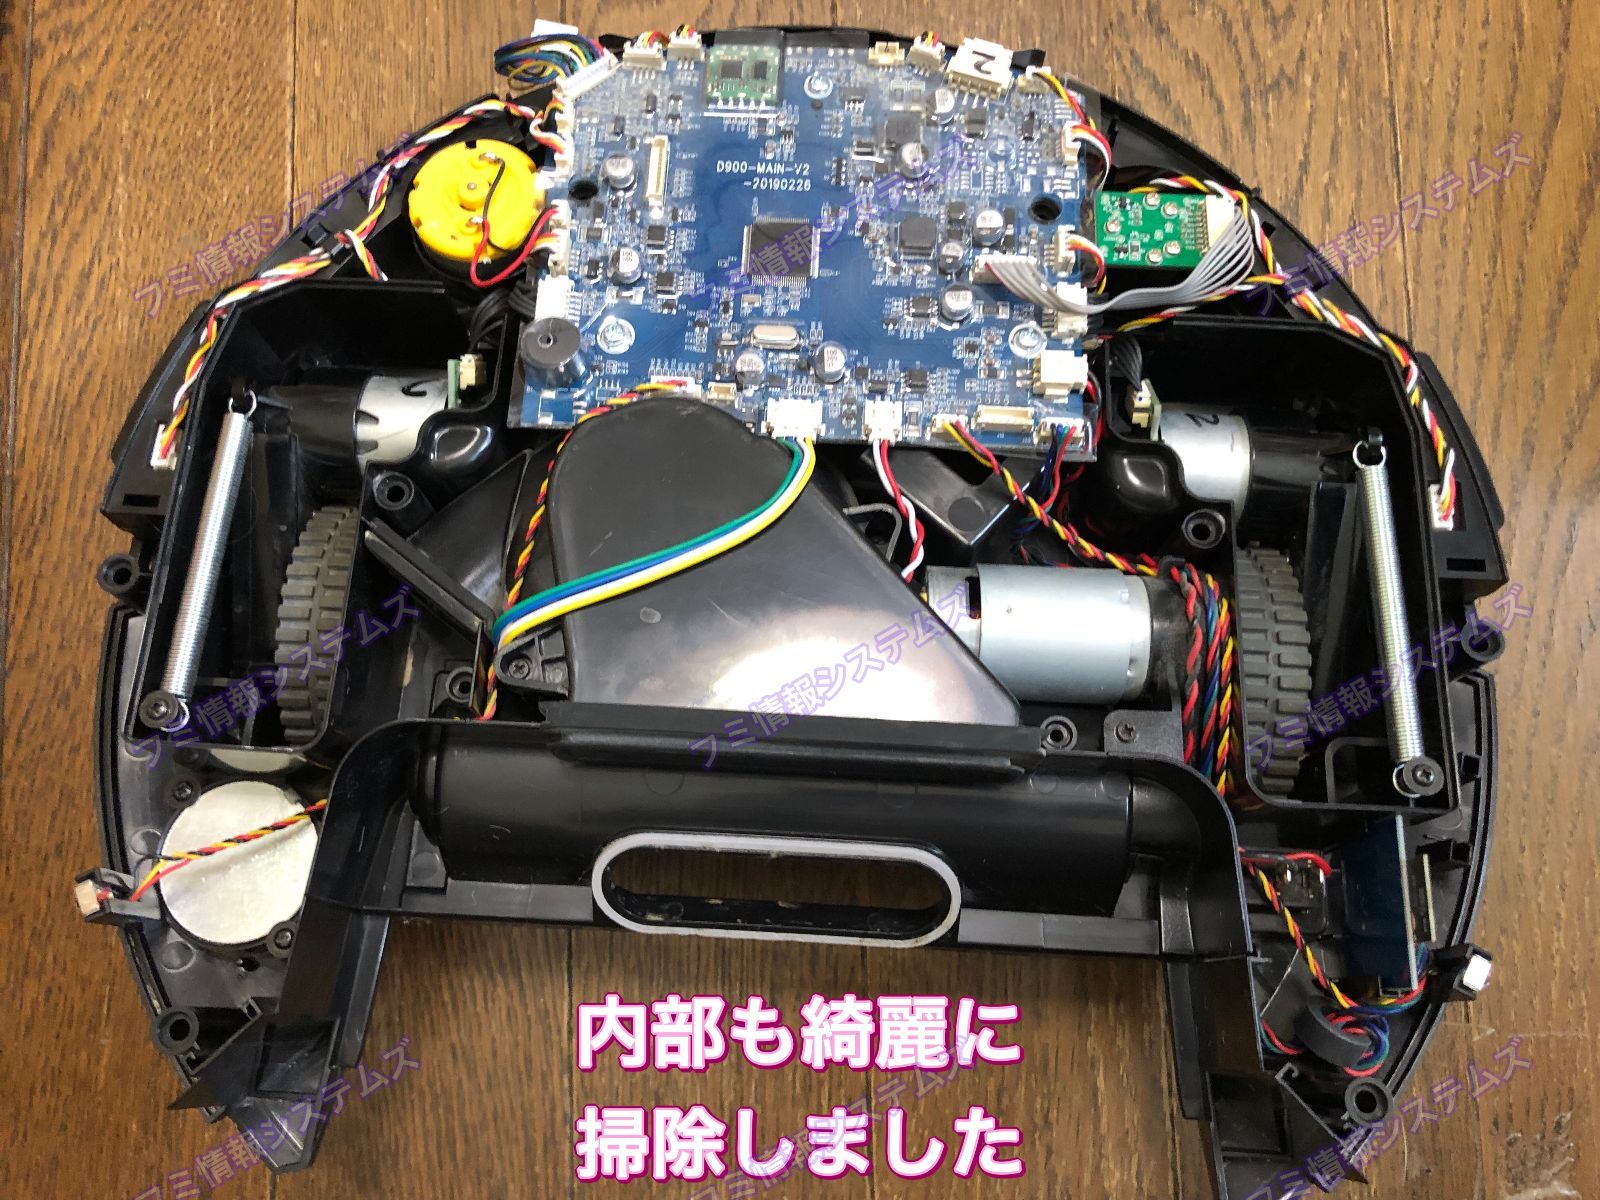 Kyvol IoT 型スマート掃除ロボット/強吸力2800Pa/100分間連続稼働/落下 